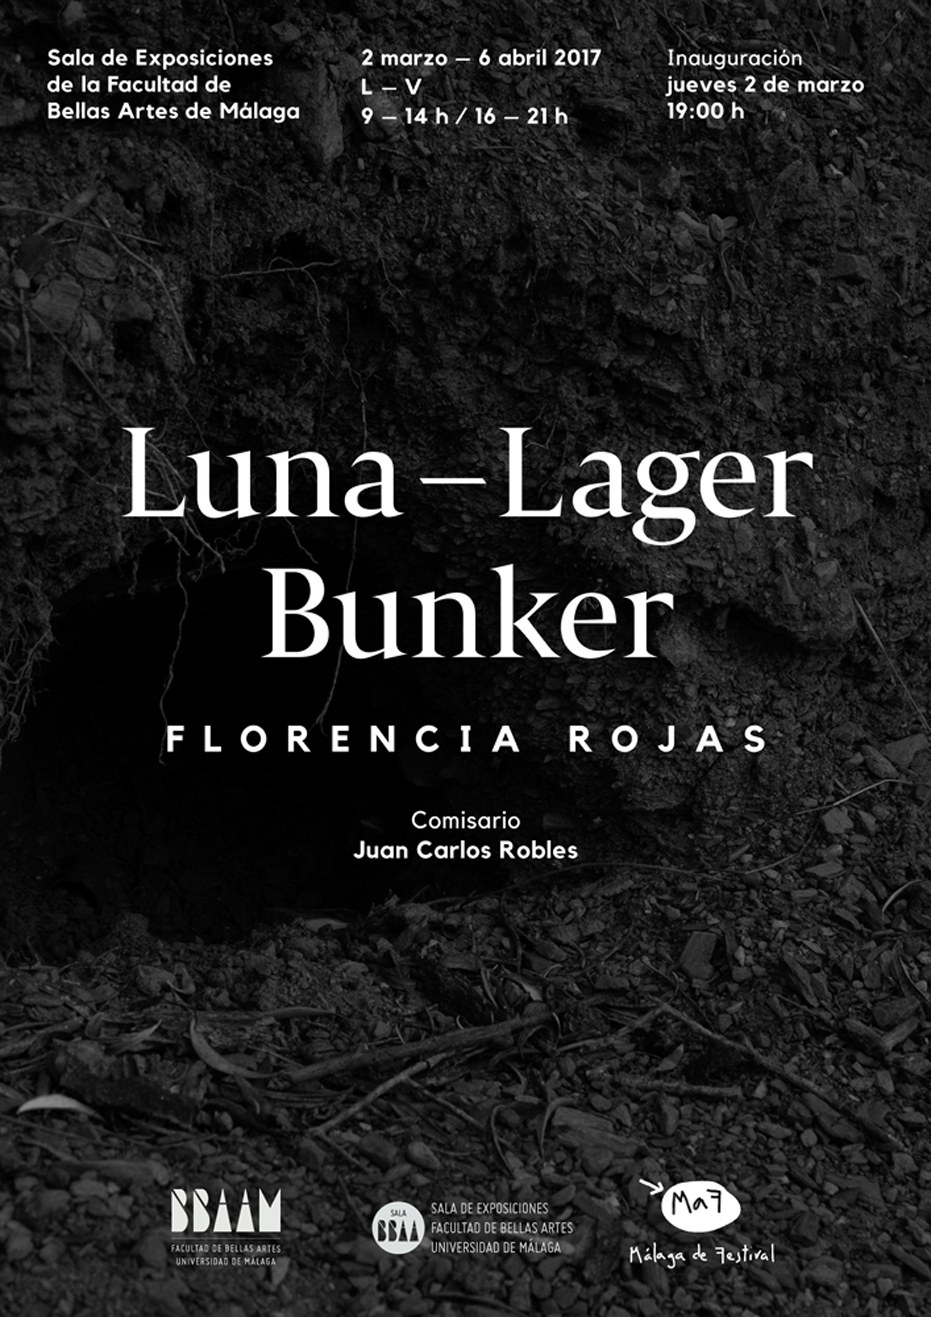 Exposición 'Luna-Lager Bunker', de Florencia Rojas